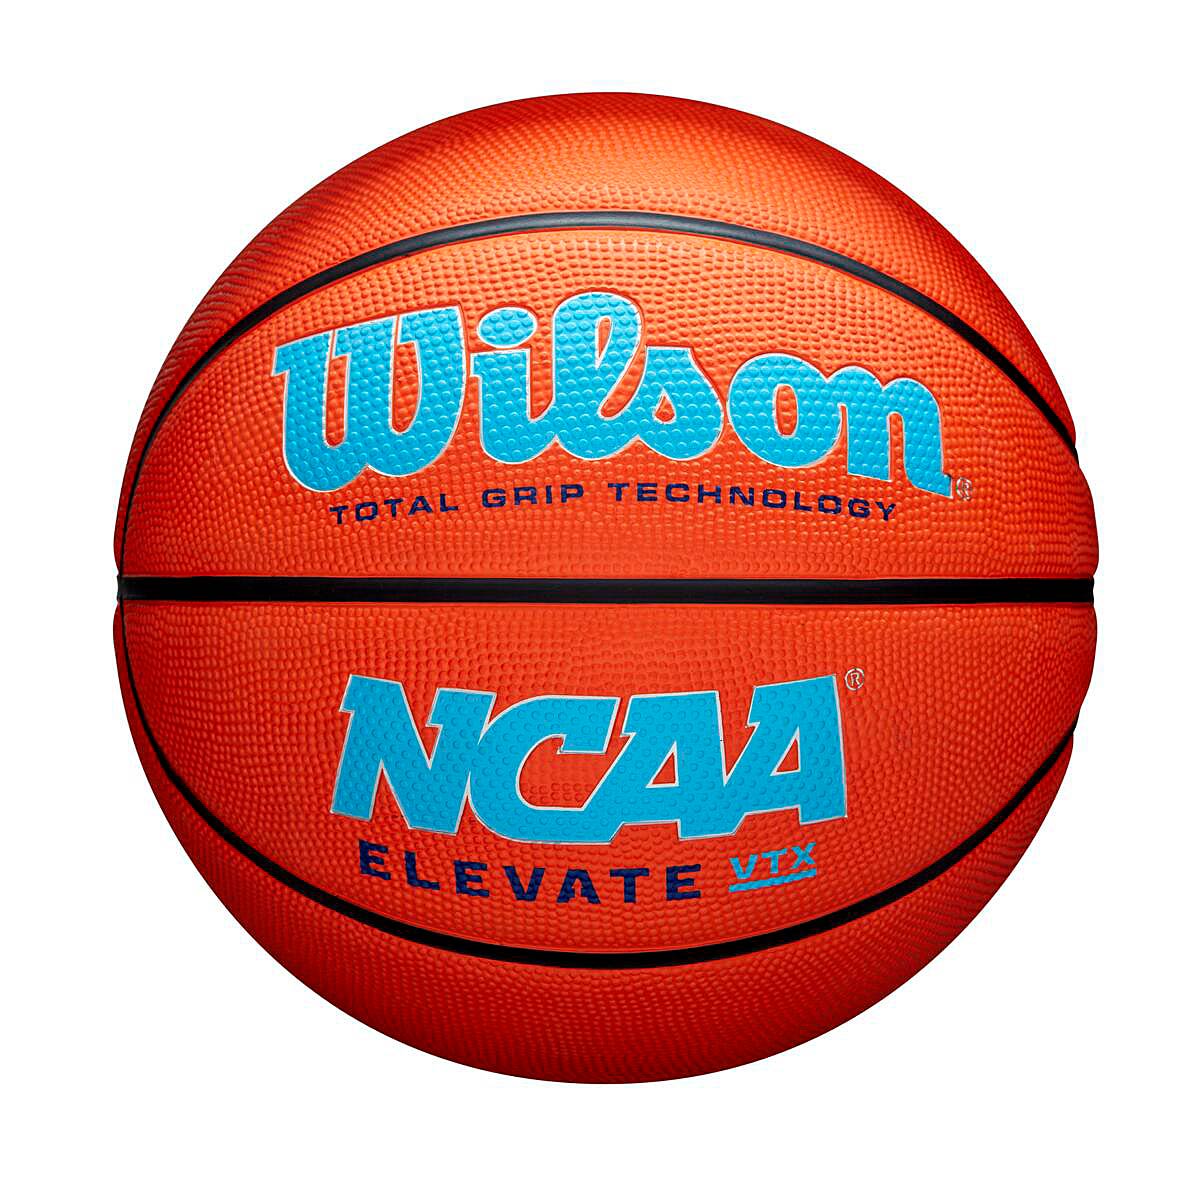 Image of Wilson Ncaa Elevate Vtx Basketball, Orange/blue